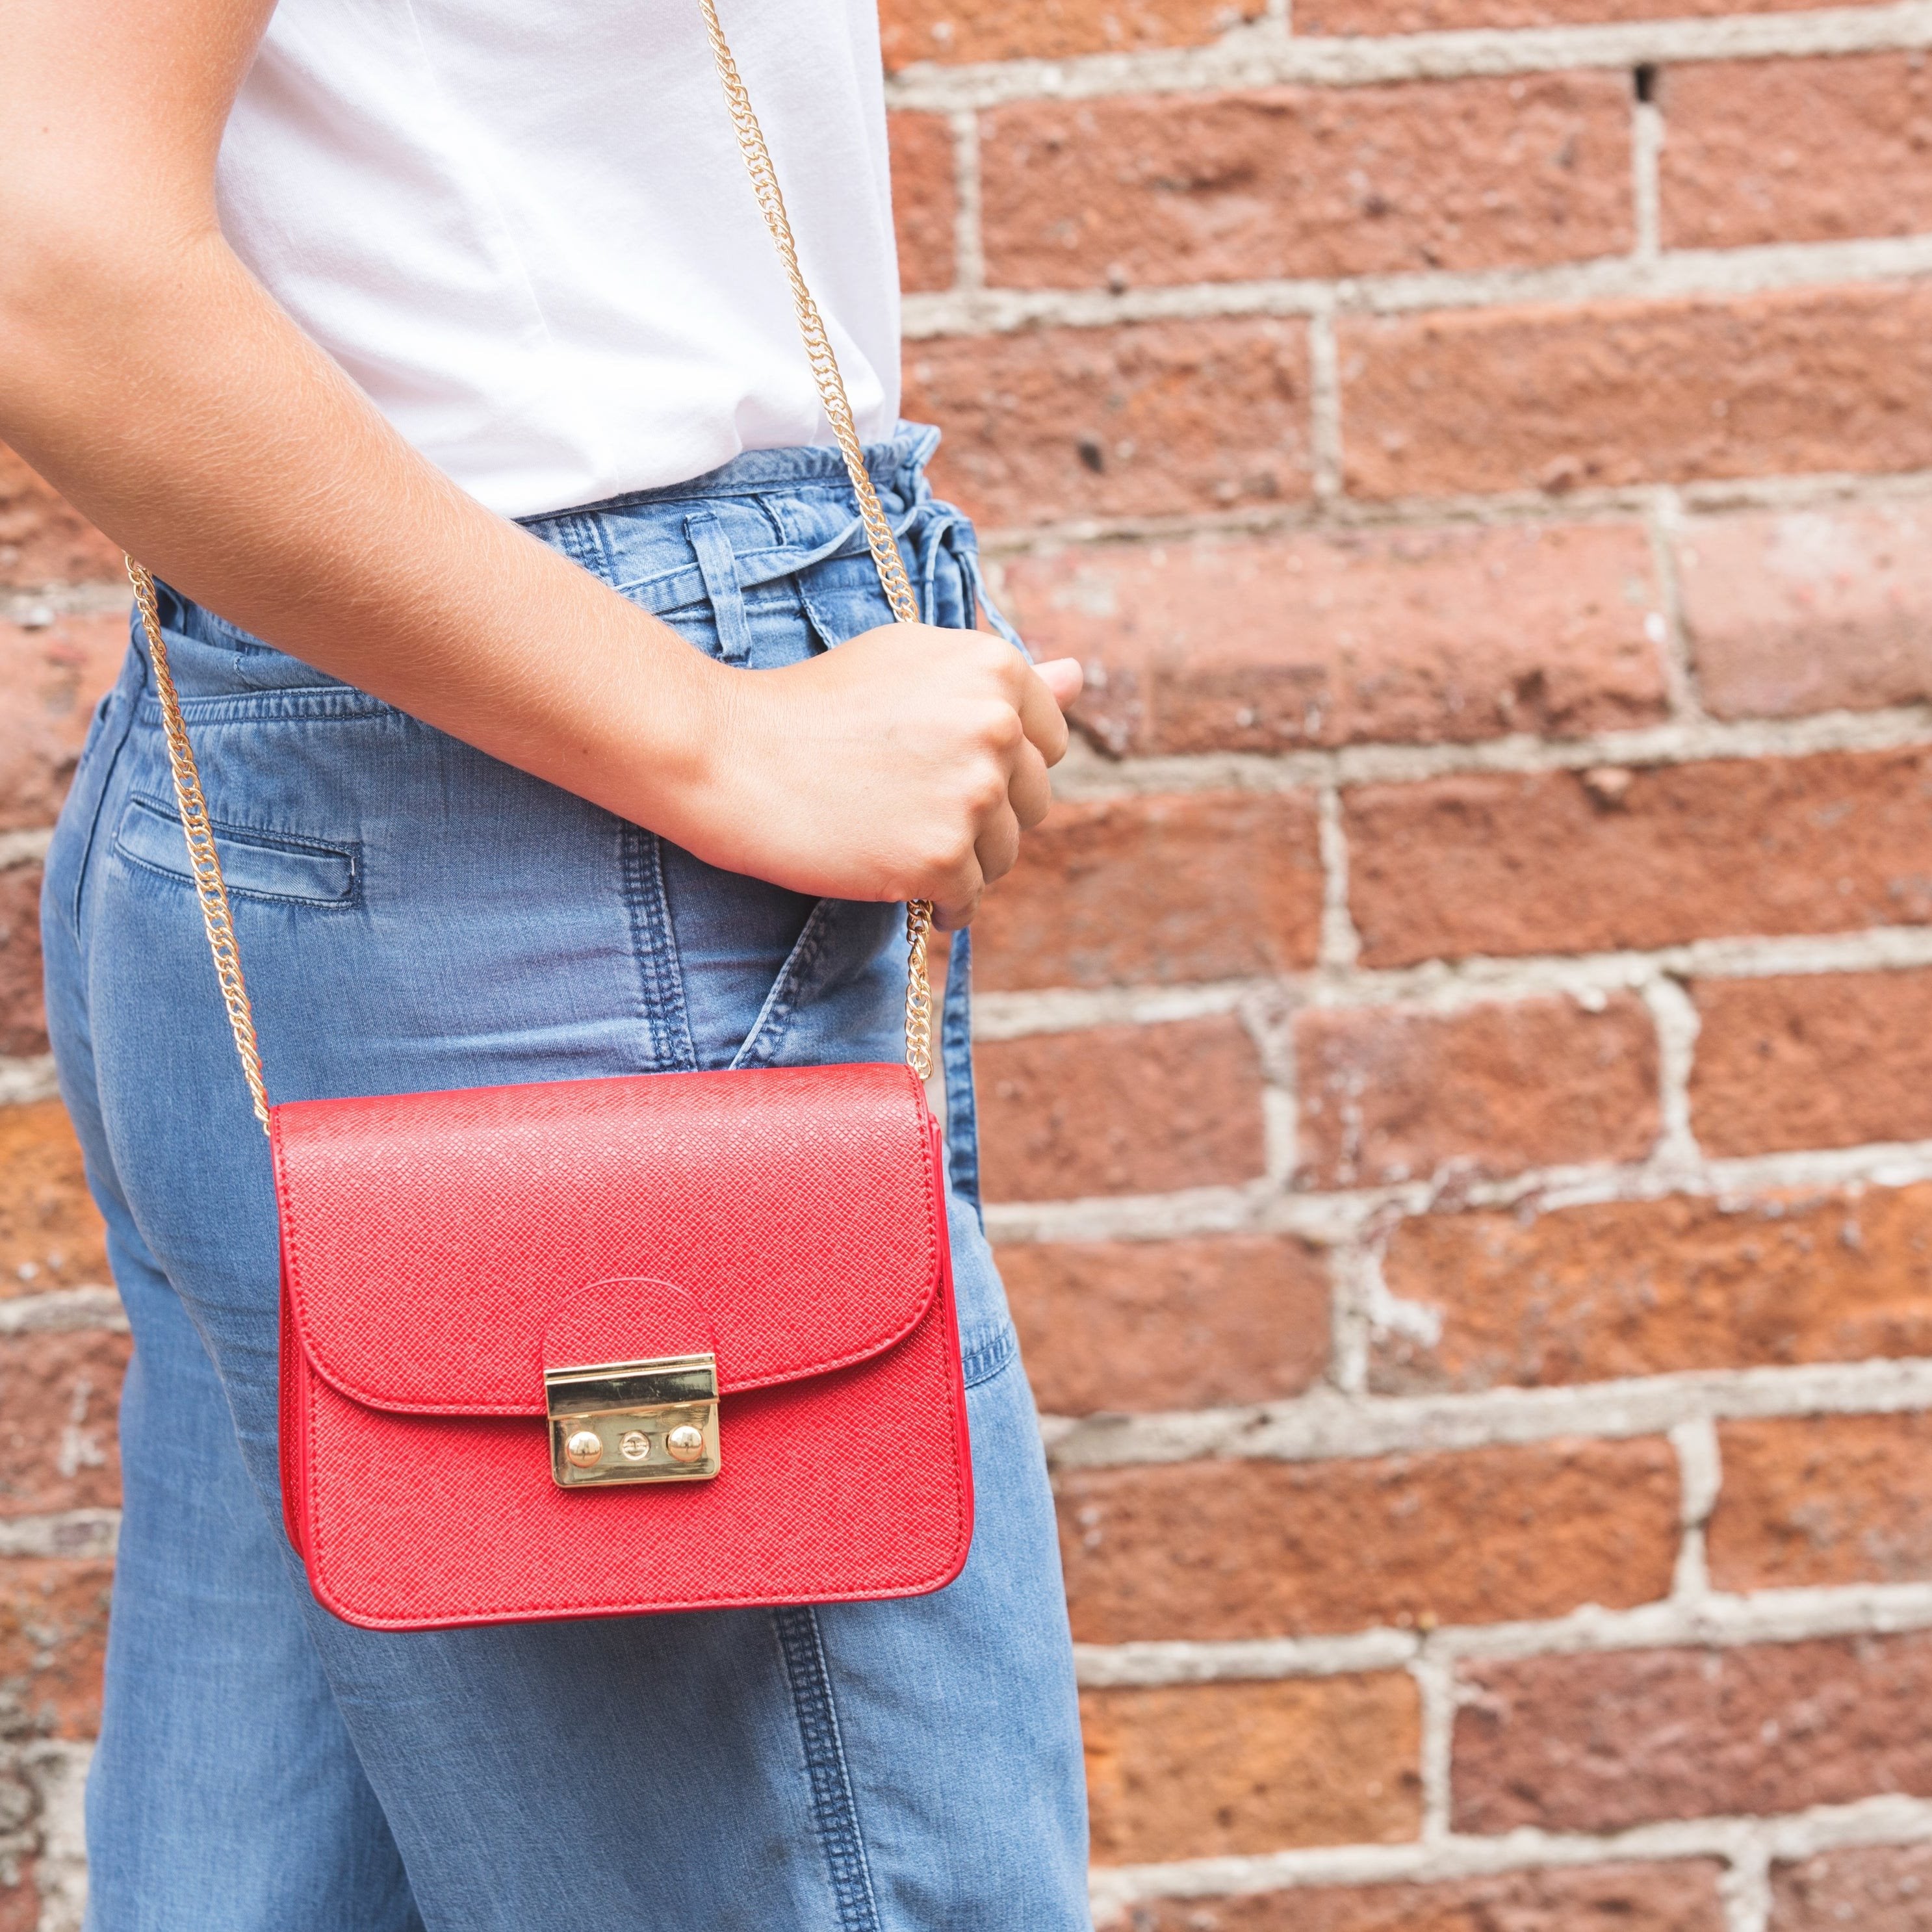 Women’s Fashion: Trendy Accessories & Handbags - VarietyGifts